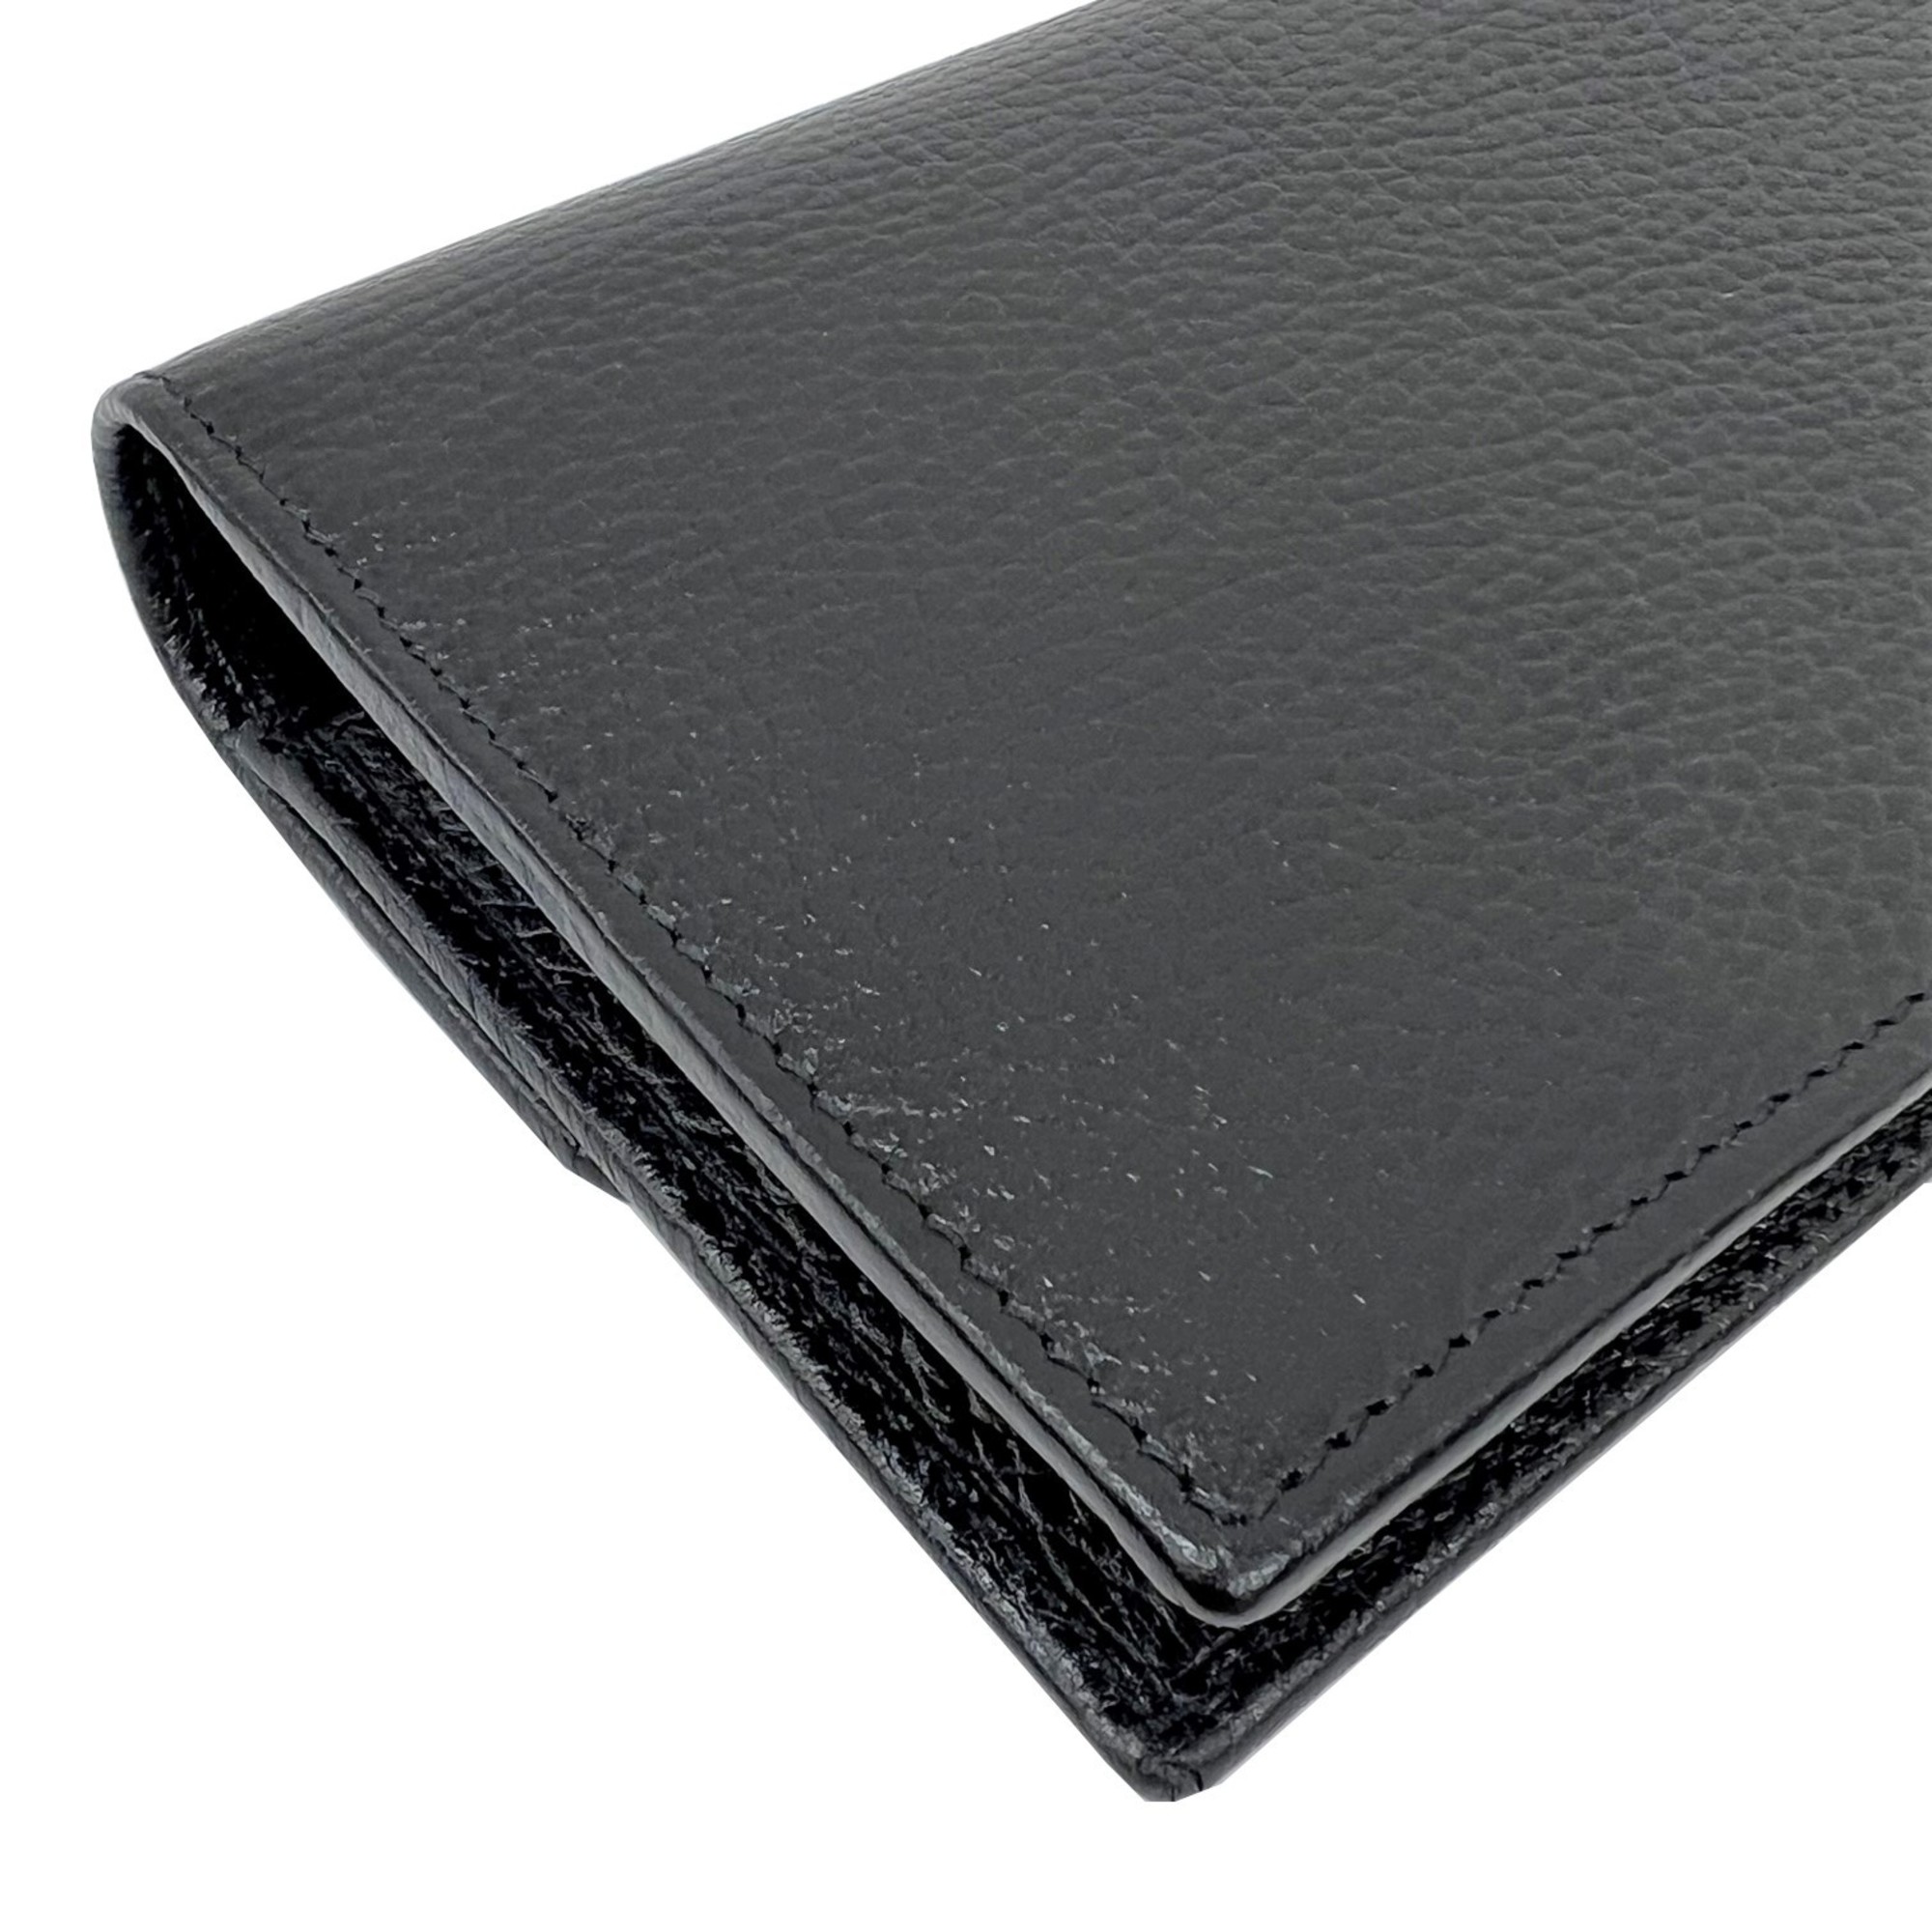 GUCCI Interlocking G Chain Shoulder Bag Long Wallet Clutch Calfskin Leather Black 615523